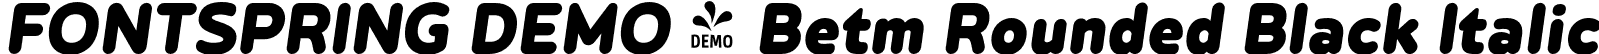 FONTSPRING DEMO - Betm Rounded Black Italic font - Fontspring-DEMO-betmrounded-blackitalic.otf